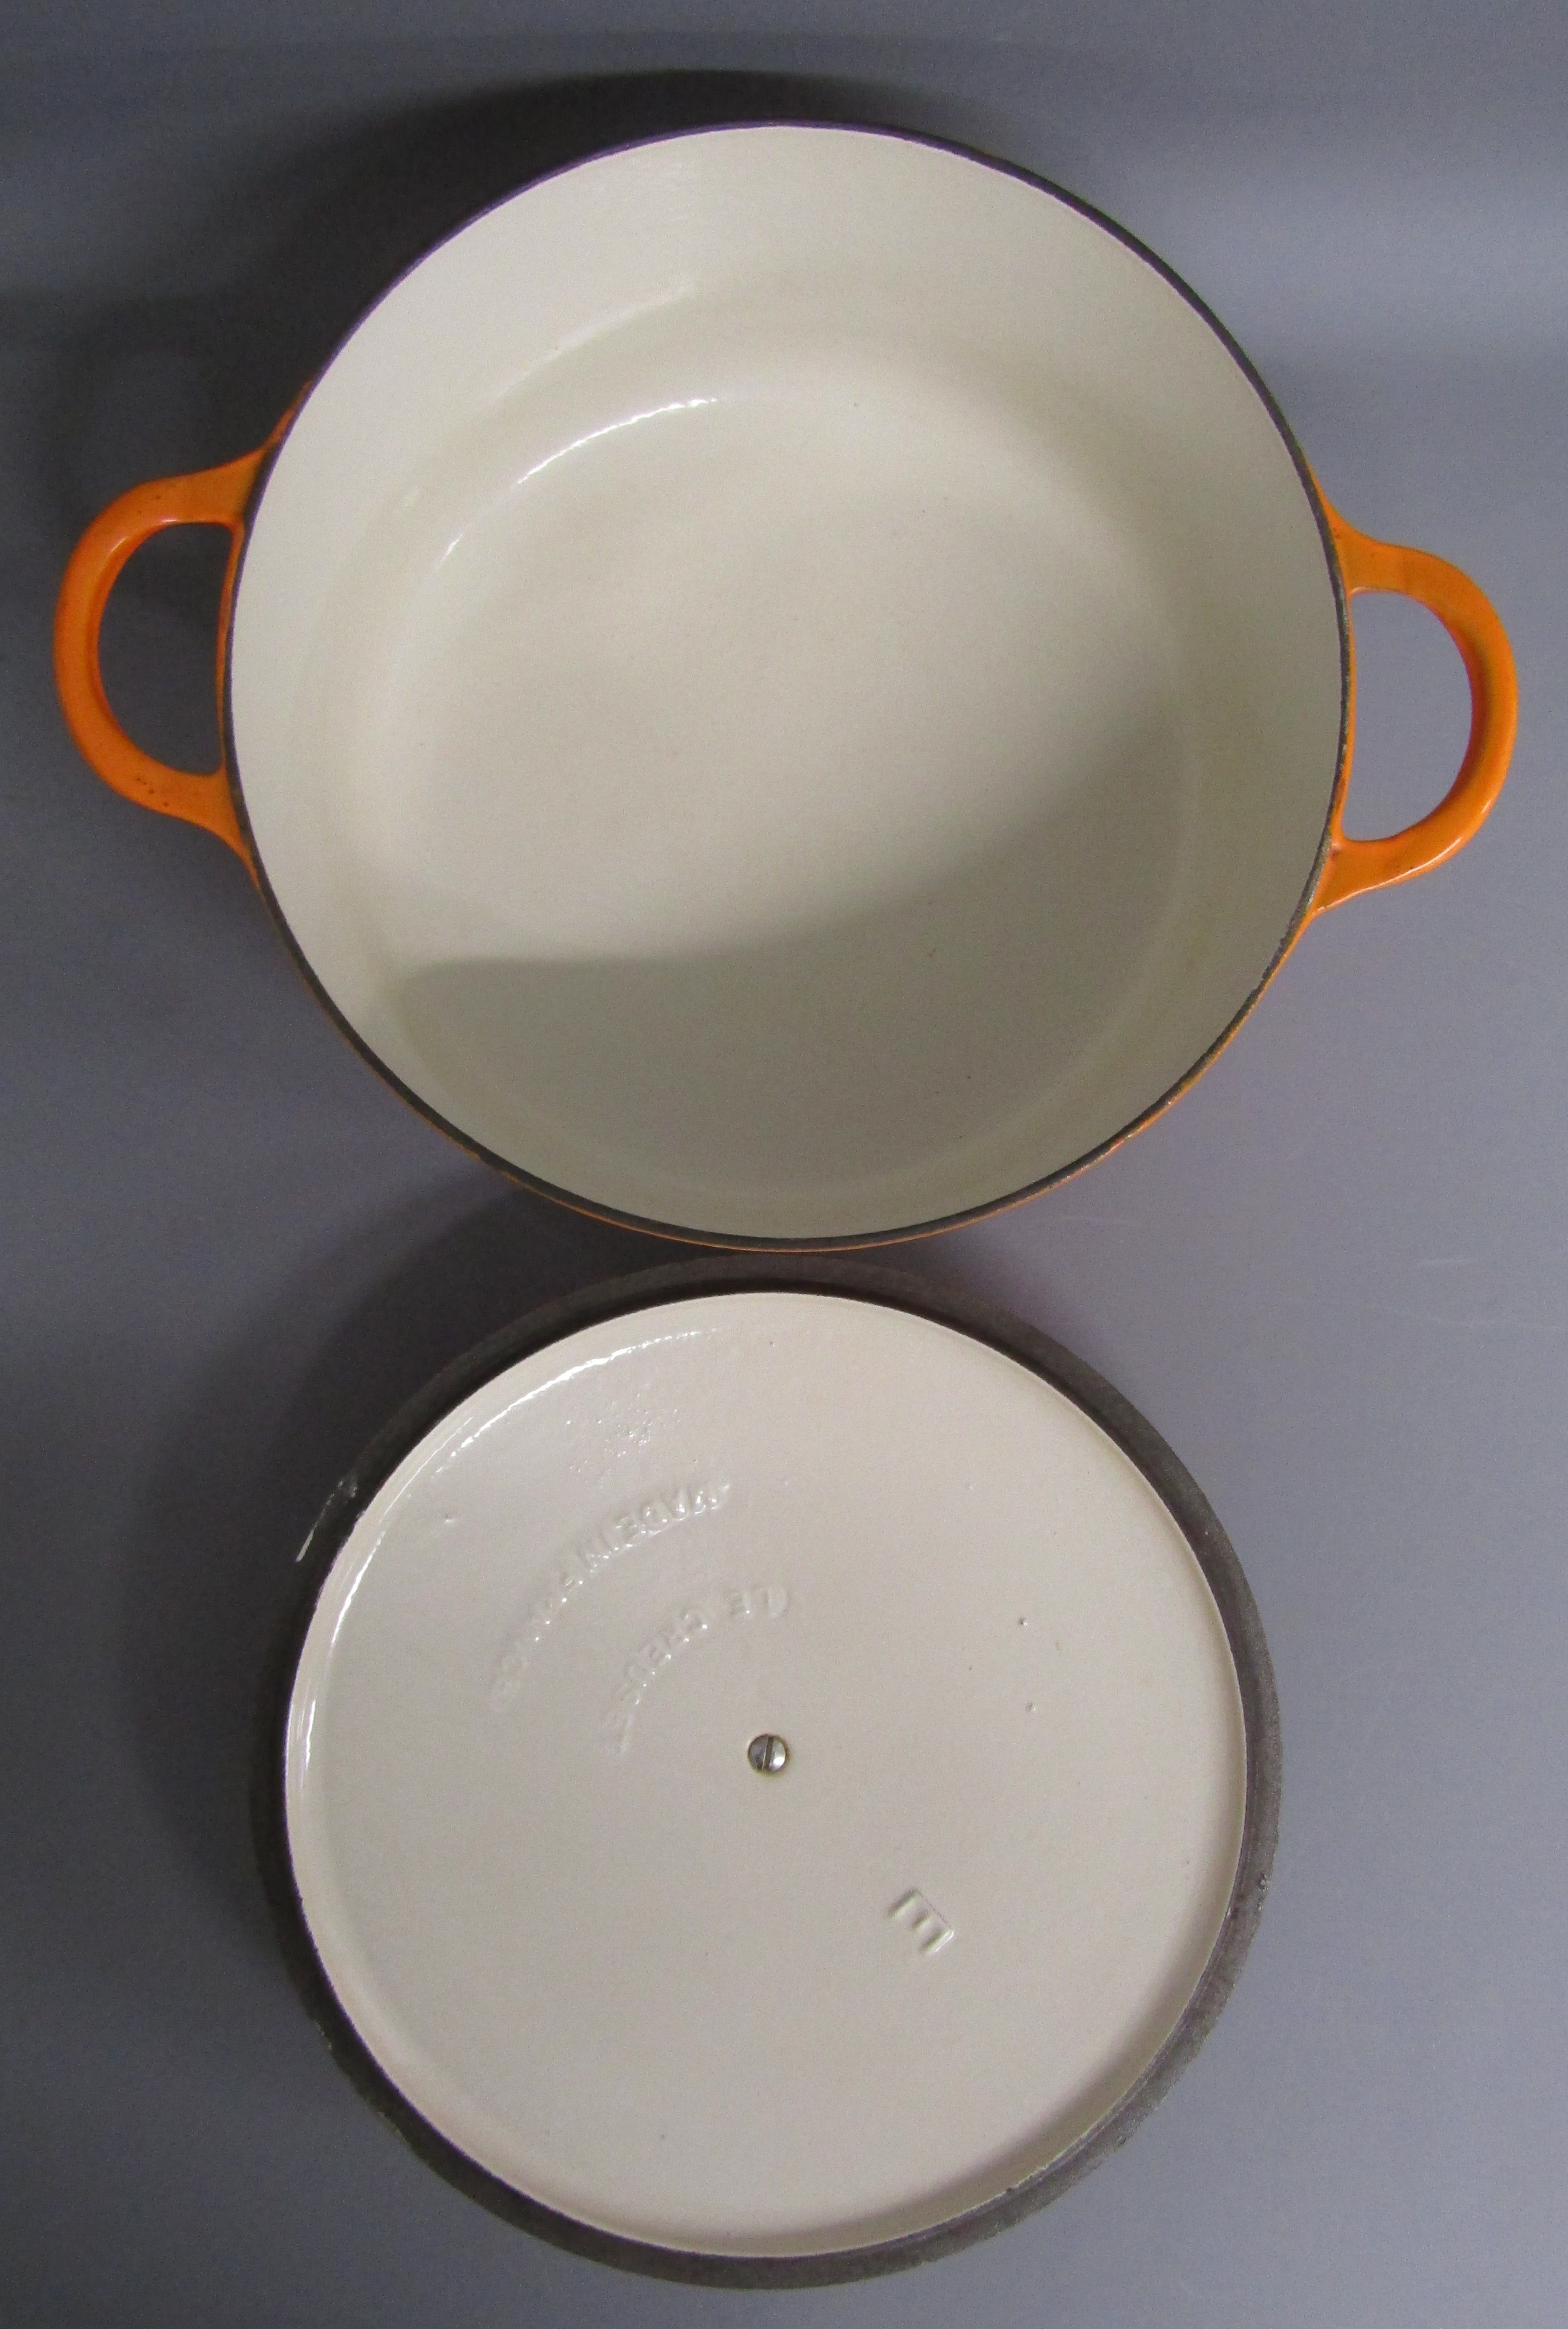 Le Creuset Volcanic orange casserole dish 'E' - approx. 24.5cm dia - Image 2 of 2